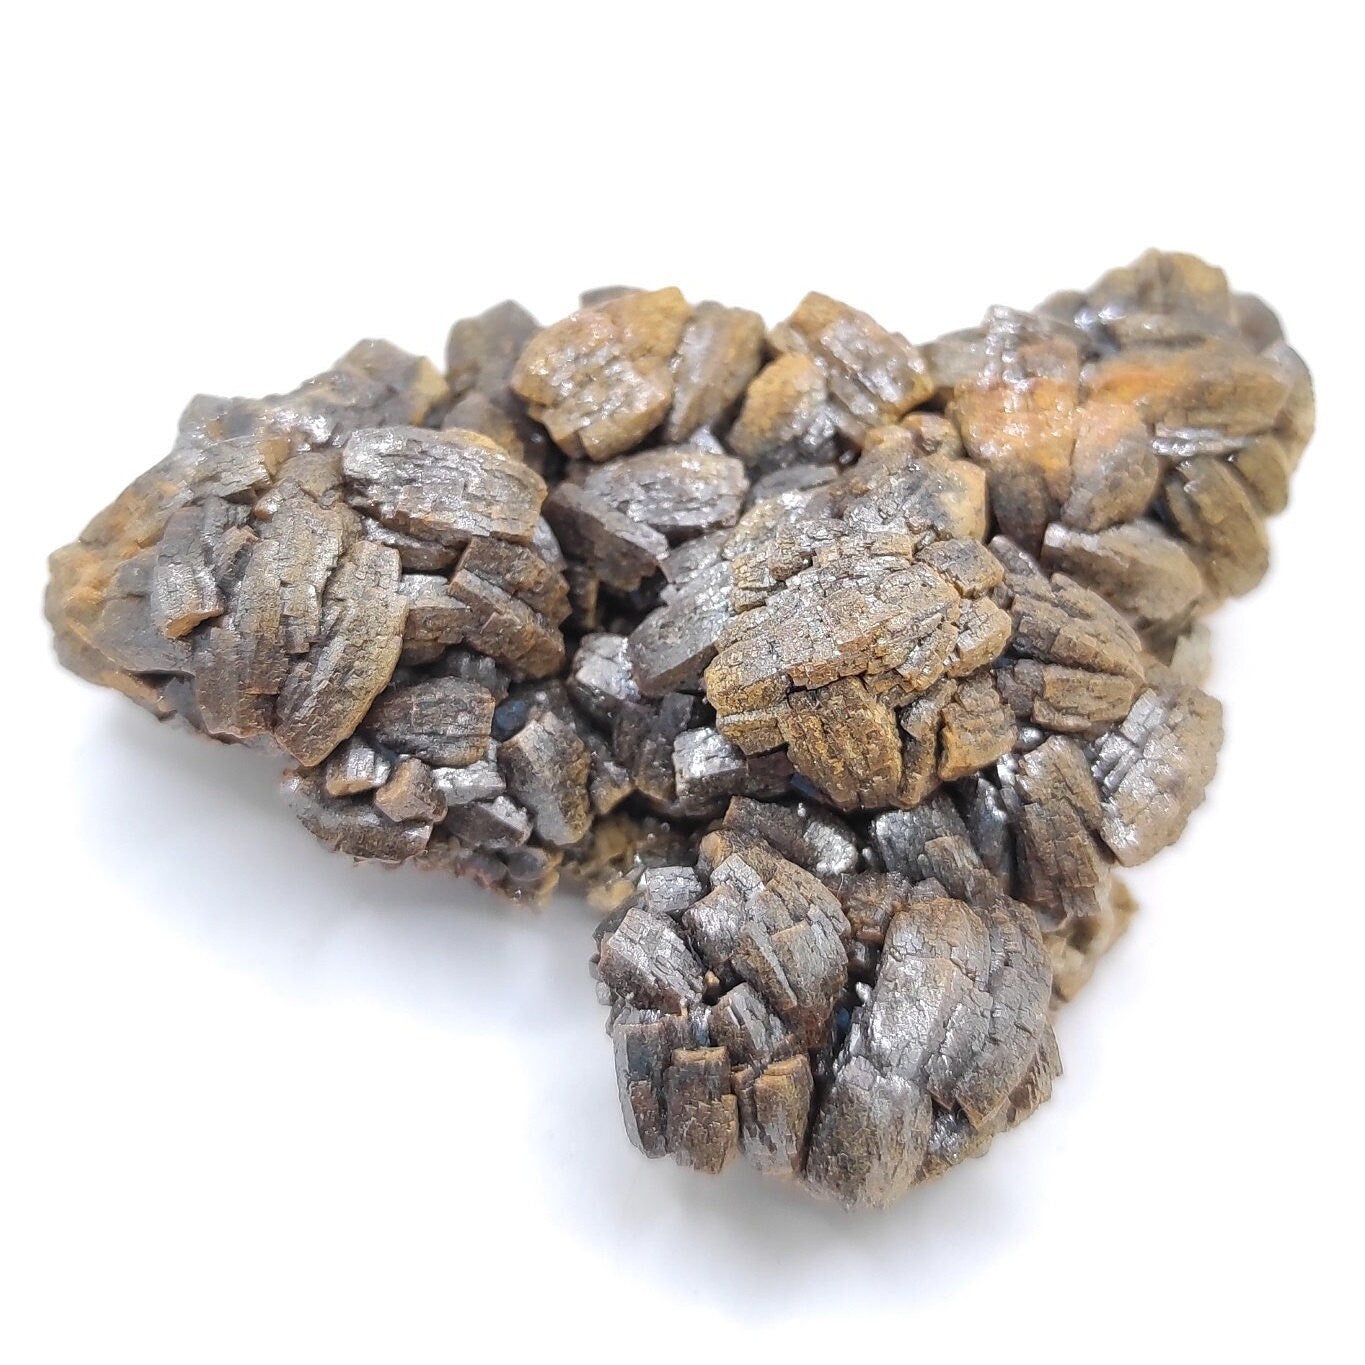 83g Vanadinite var. Endlichite - New Variety Find (April 2023) - Vanadinite Mineral Specimen from Mibladen, Morocco - Coud'a Workings